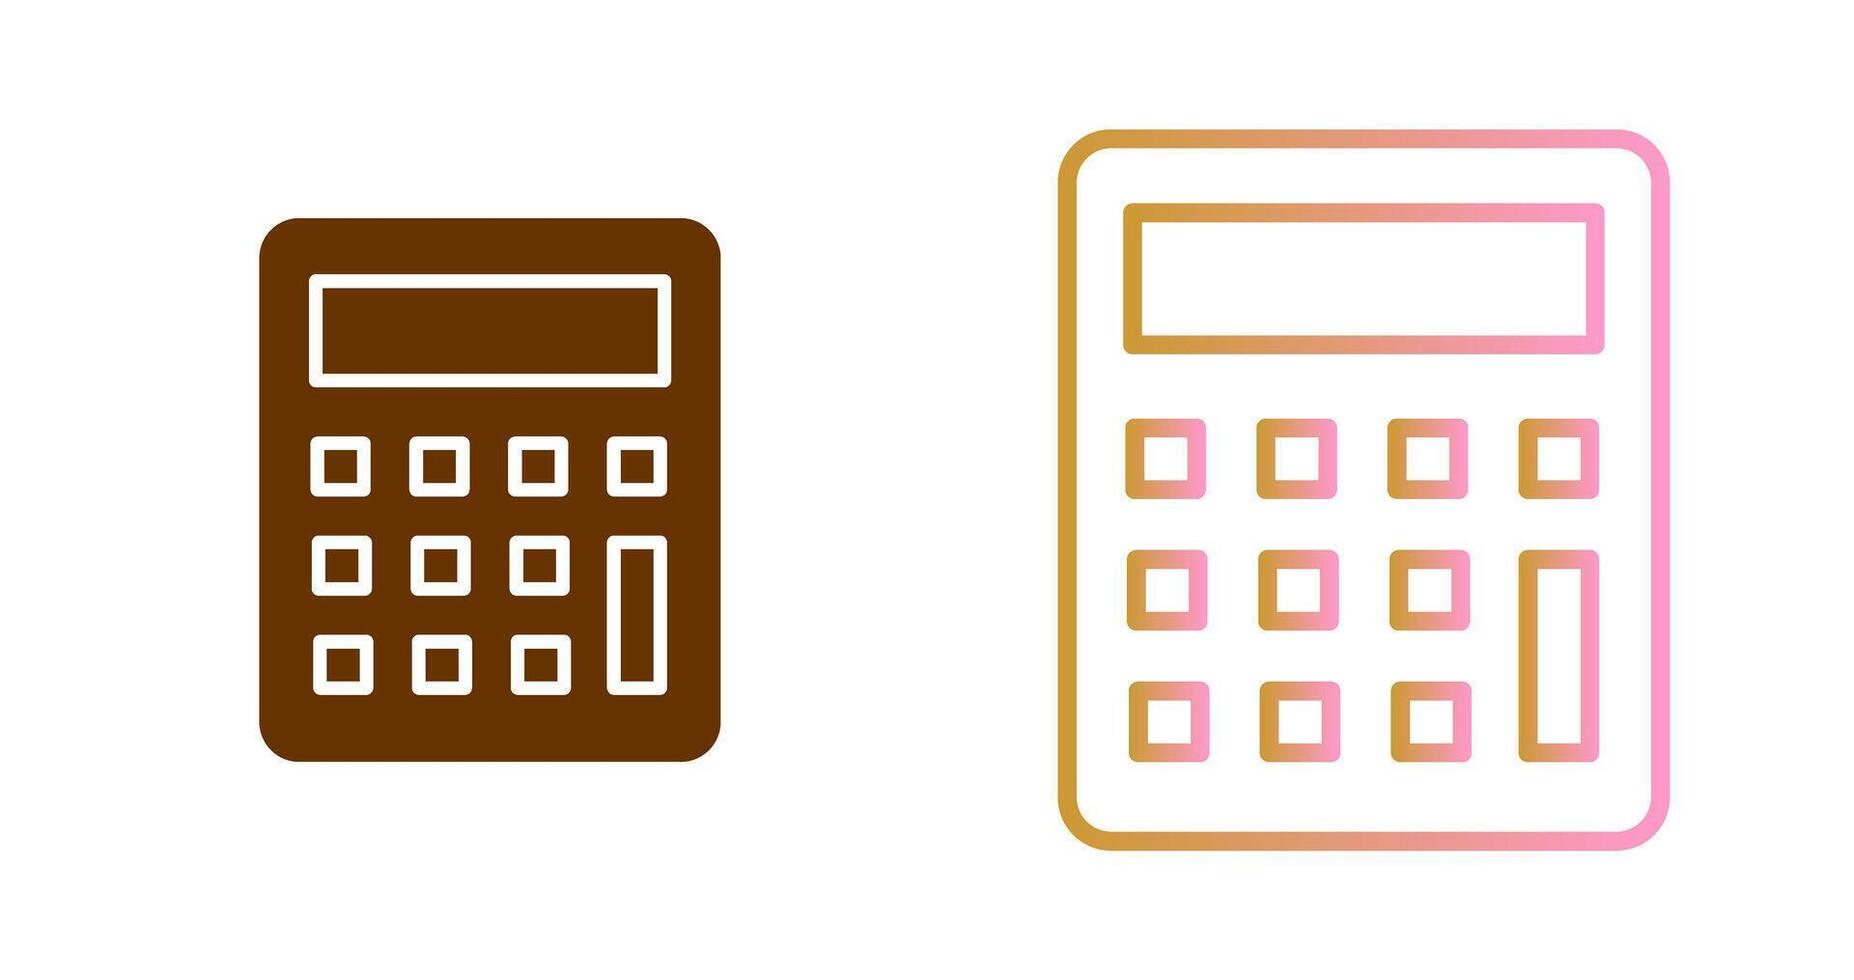 Calculator Icon Design vector